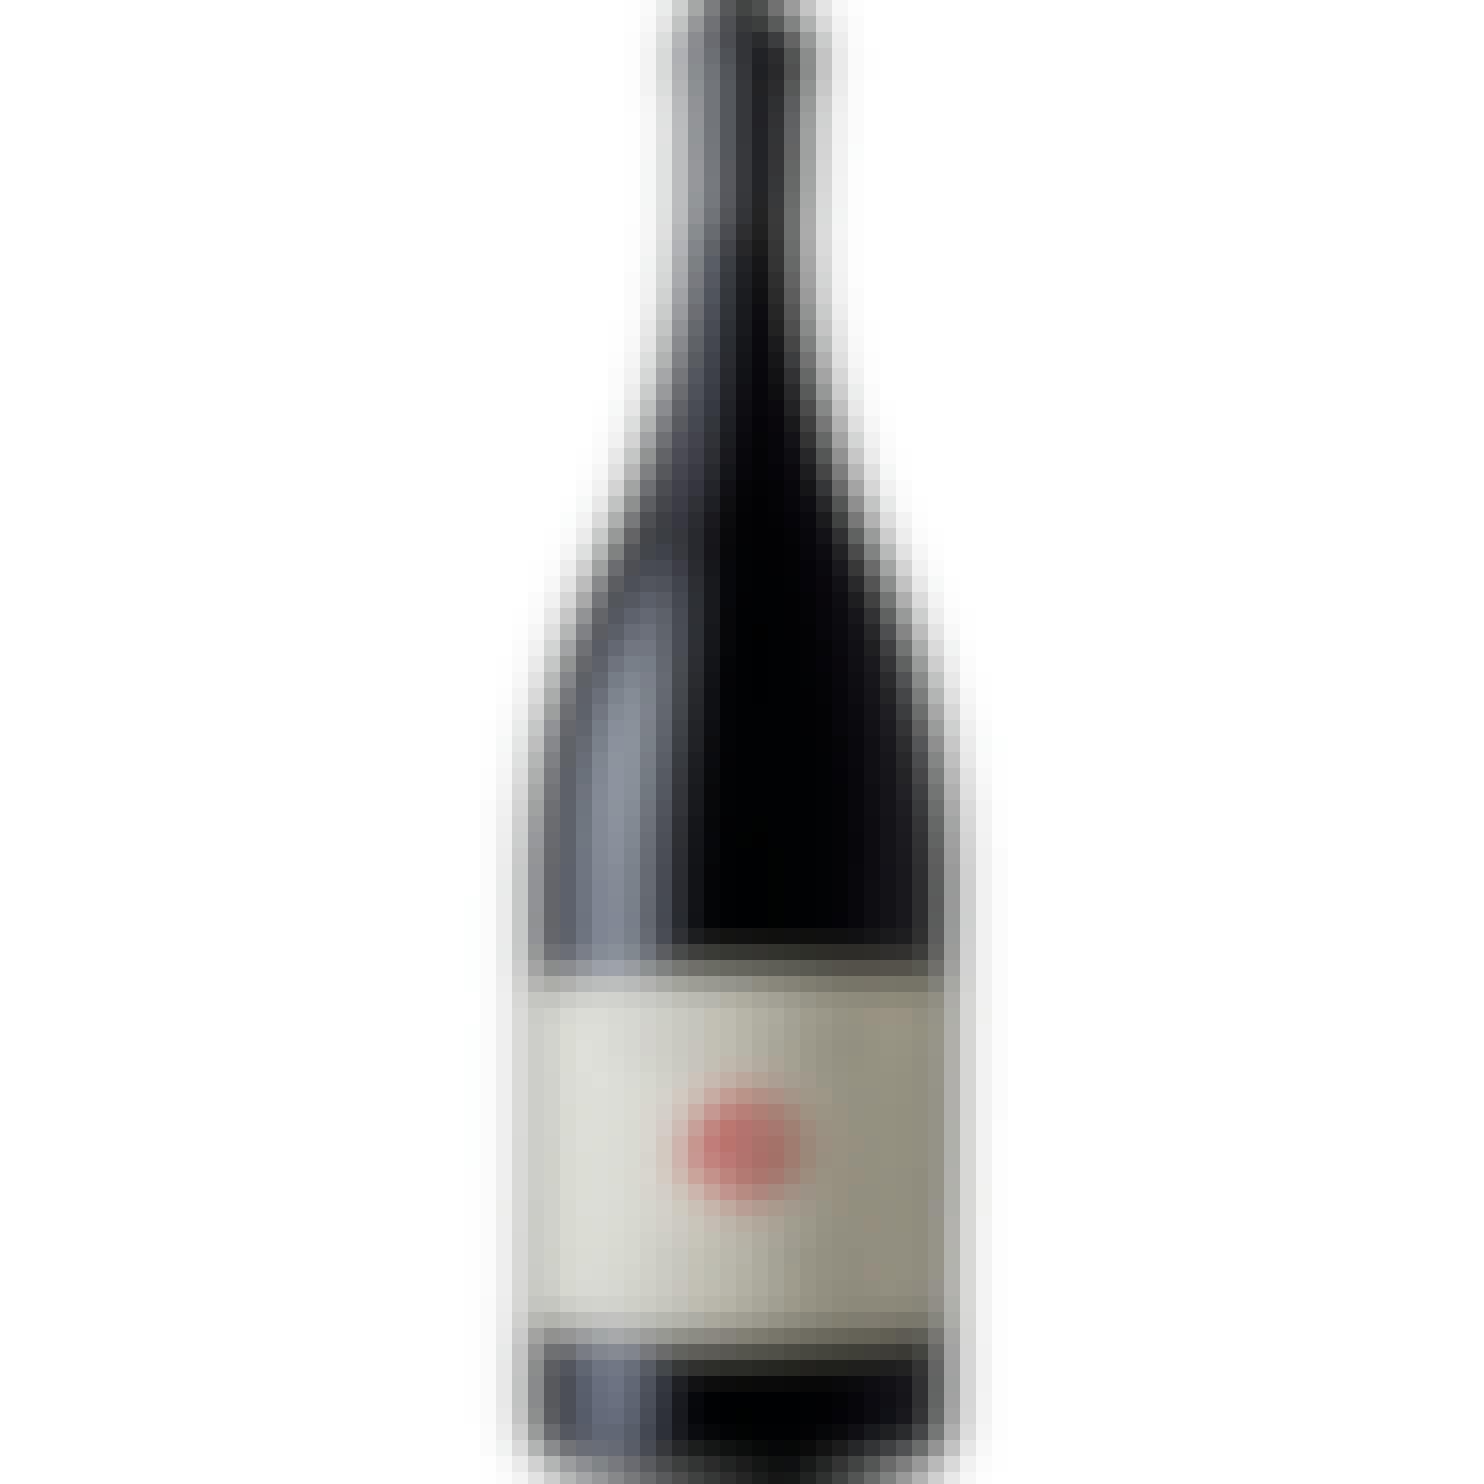 Domaine Drouhin Roserock Pinot Noir 2021 750ml